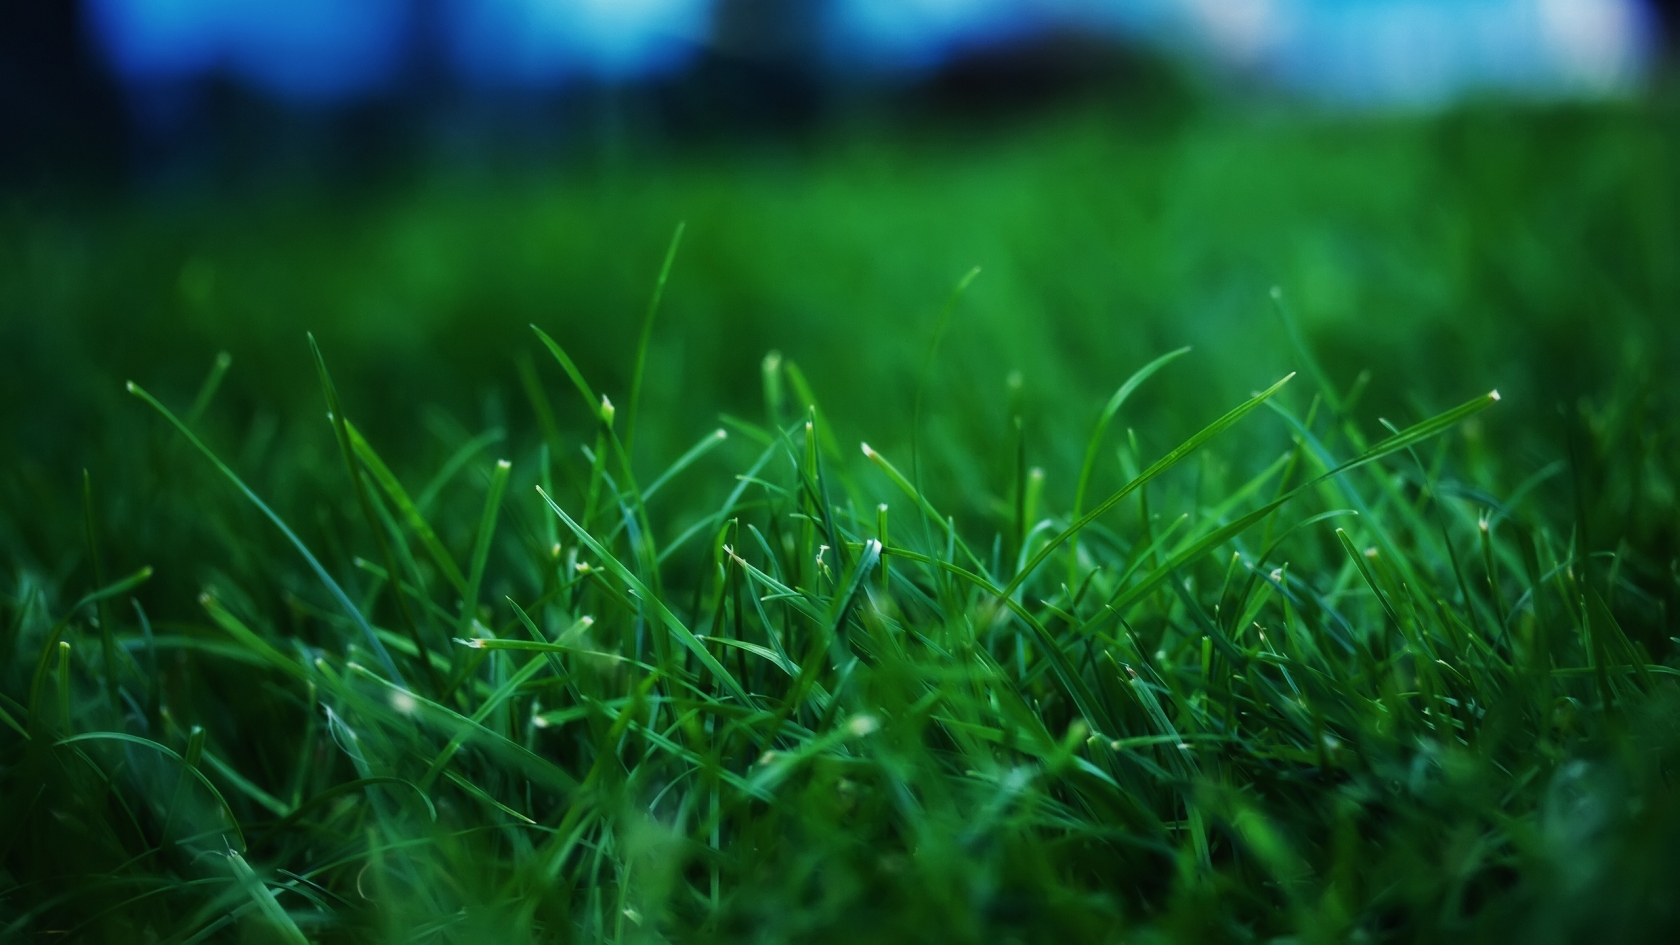 Fresh Grass for 1680 x 945 HDTV resolution